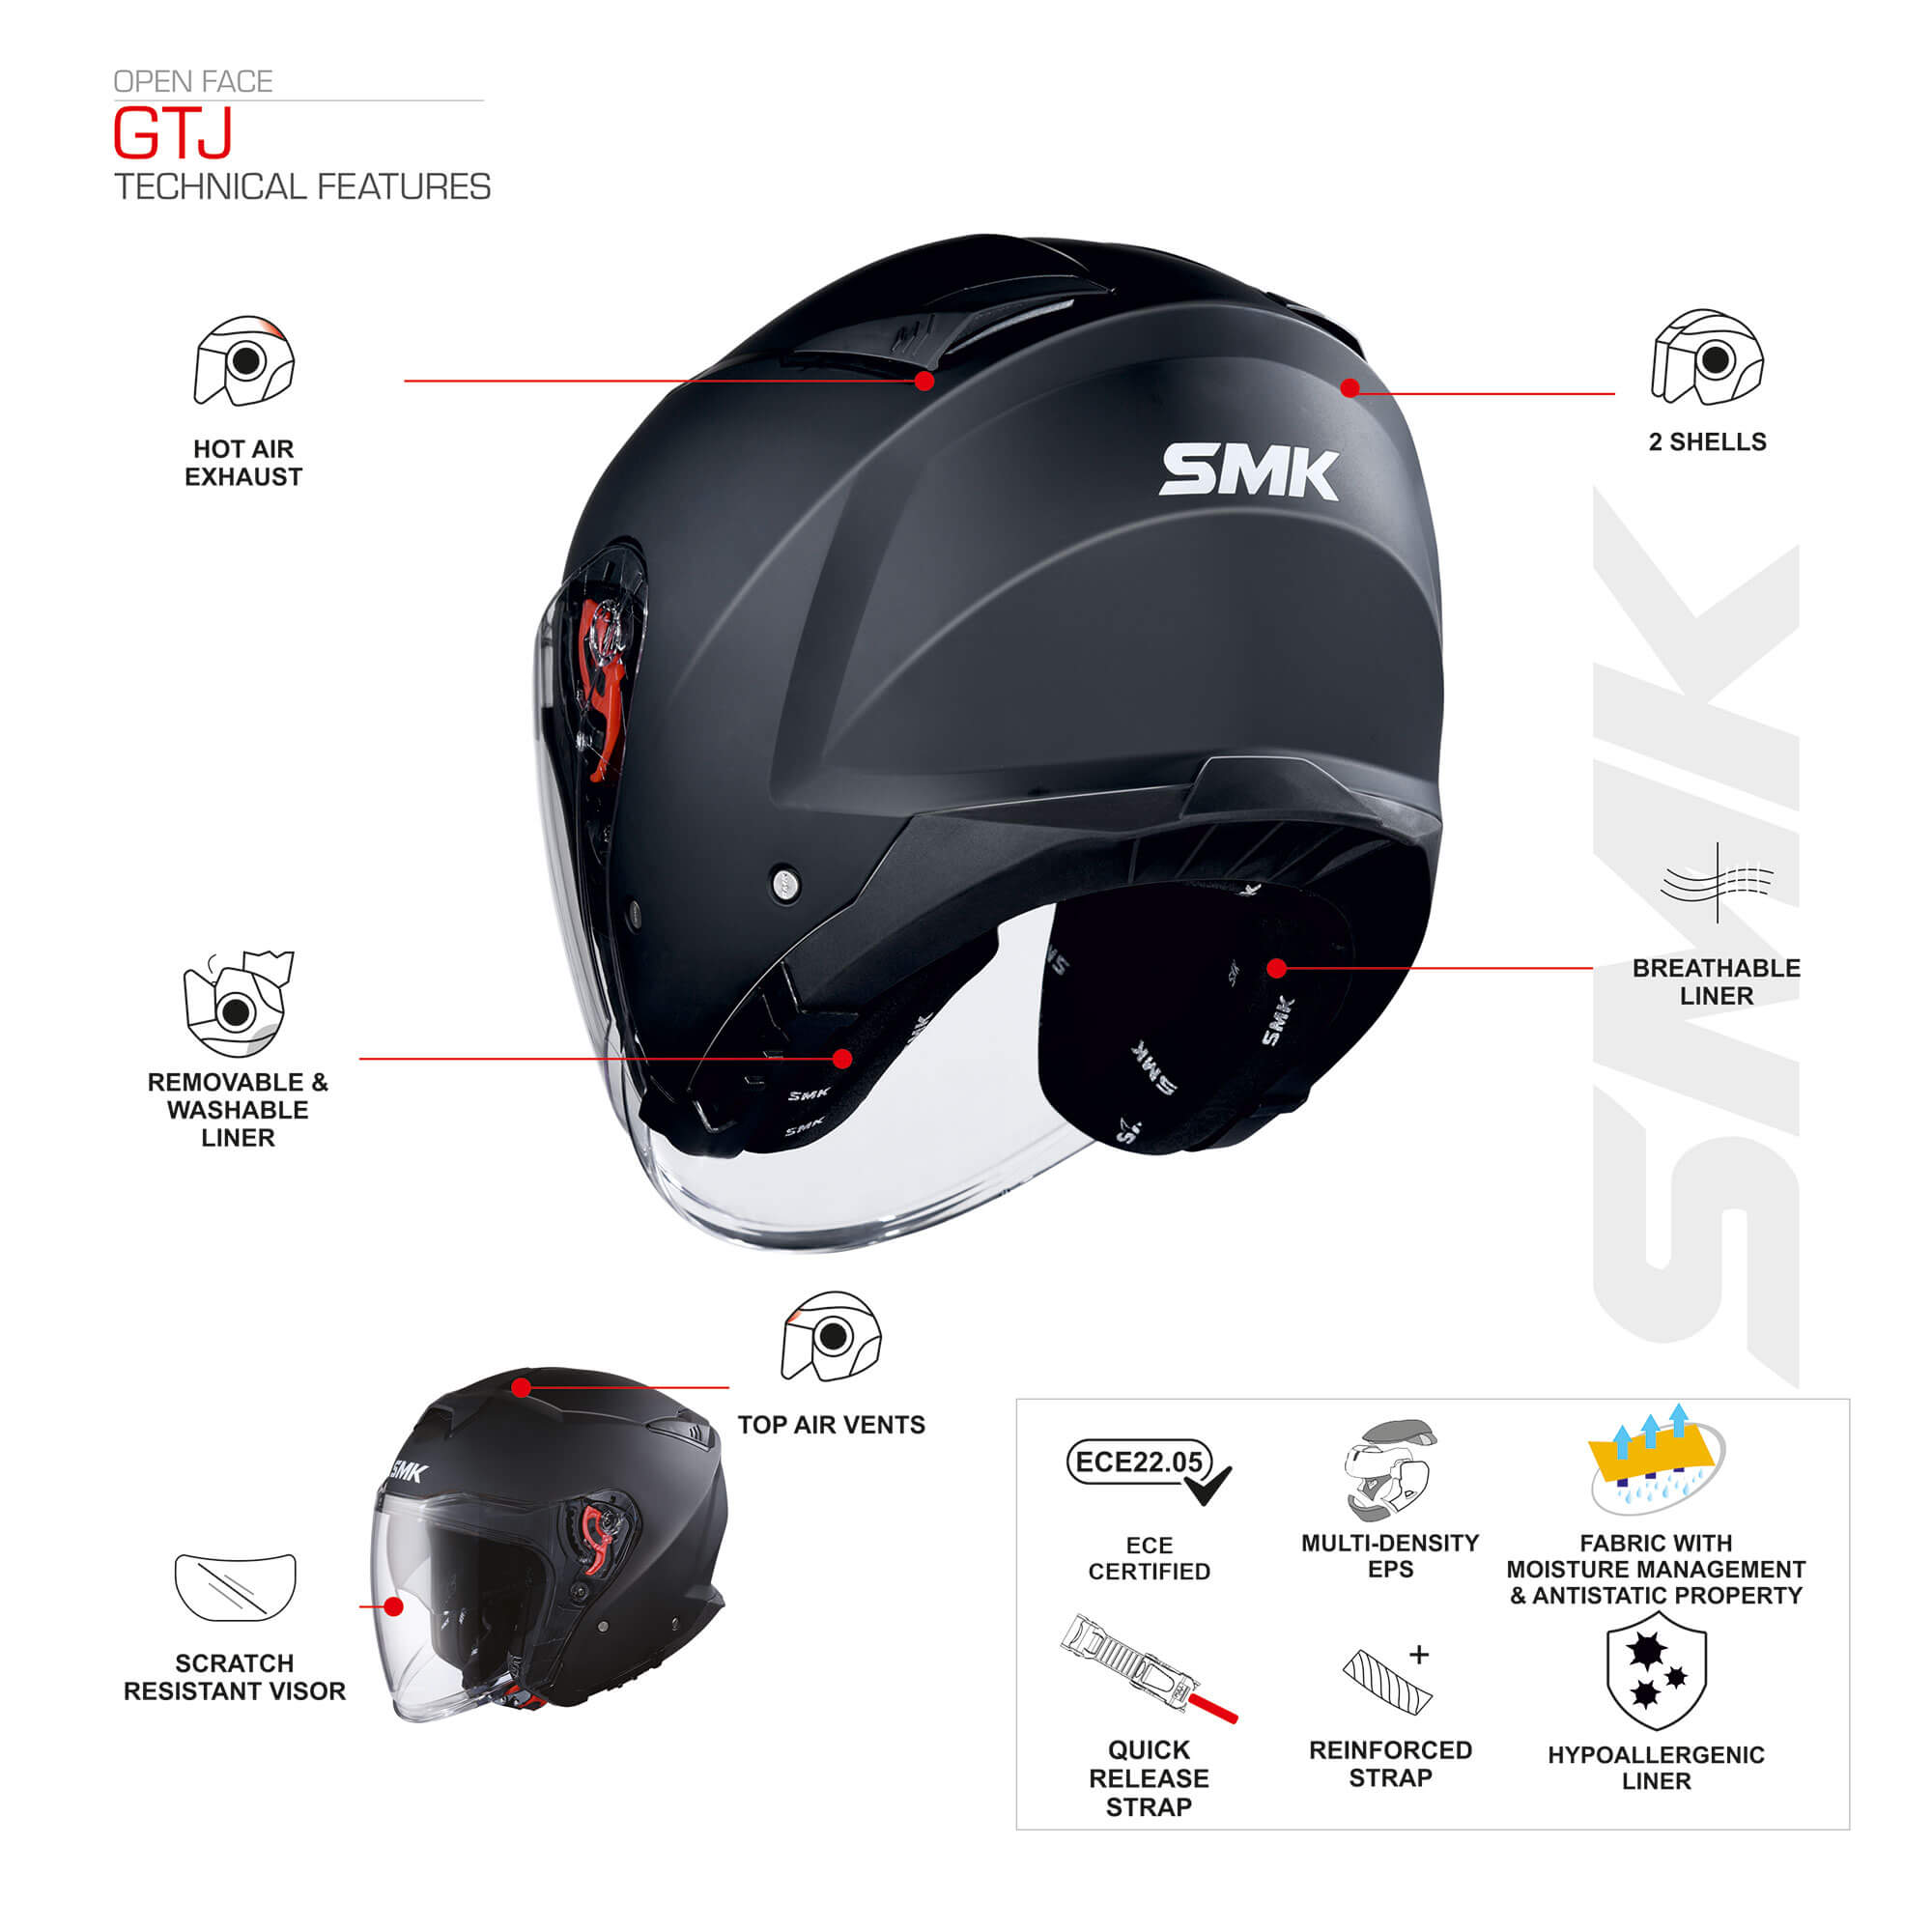 SMK GTJ Helmet Features